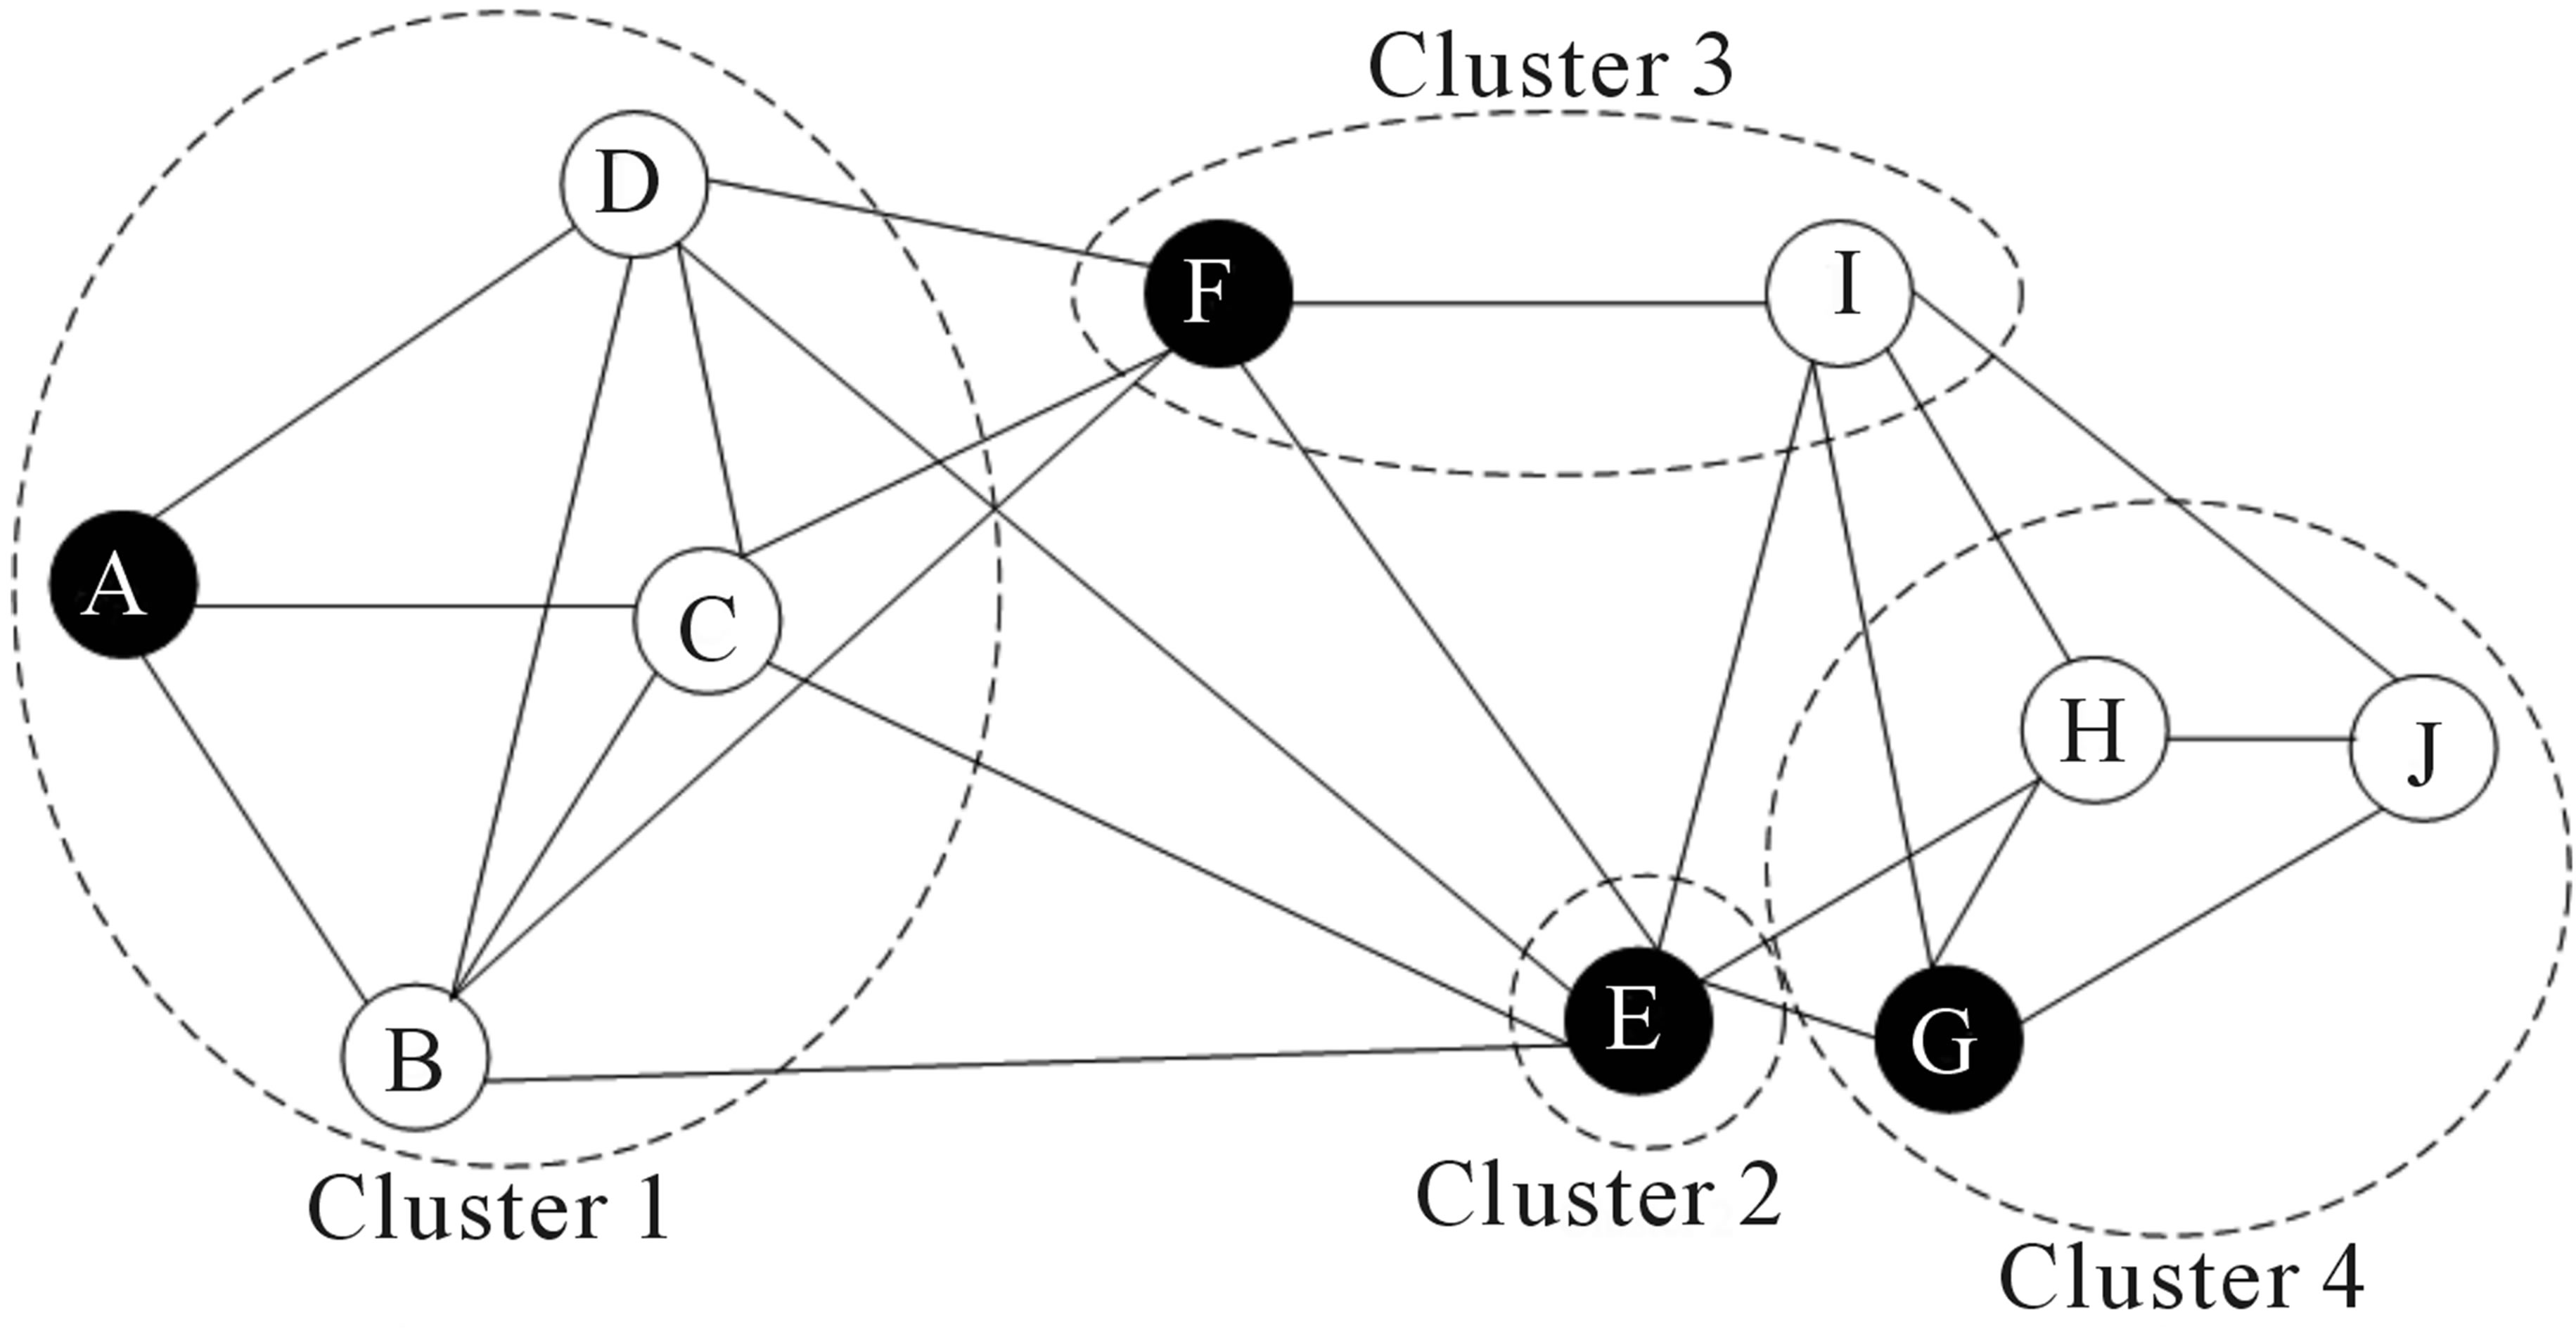 Schematic representation of the graph network